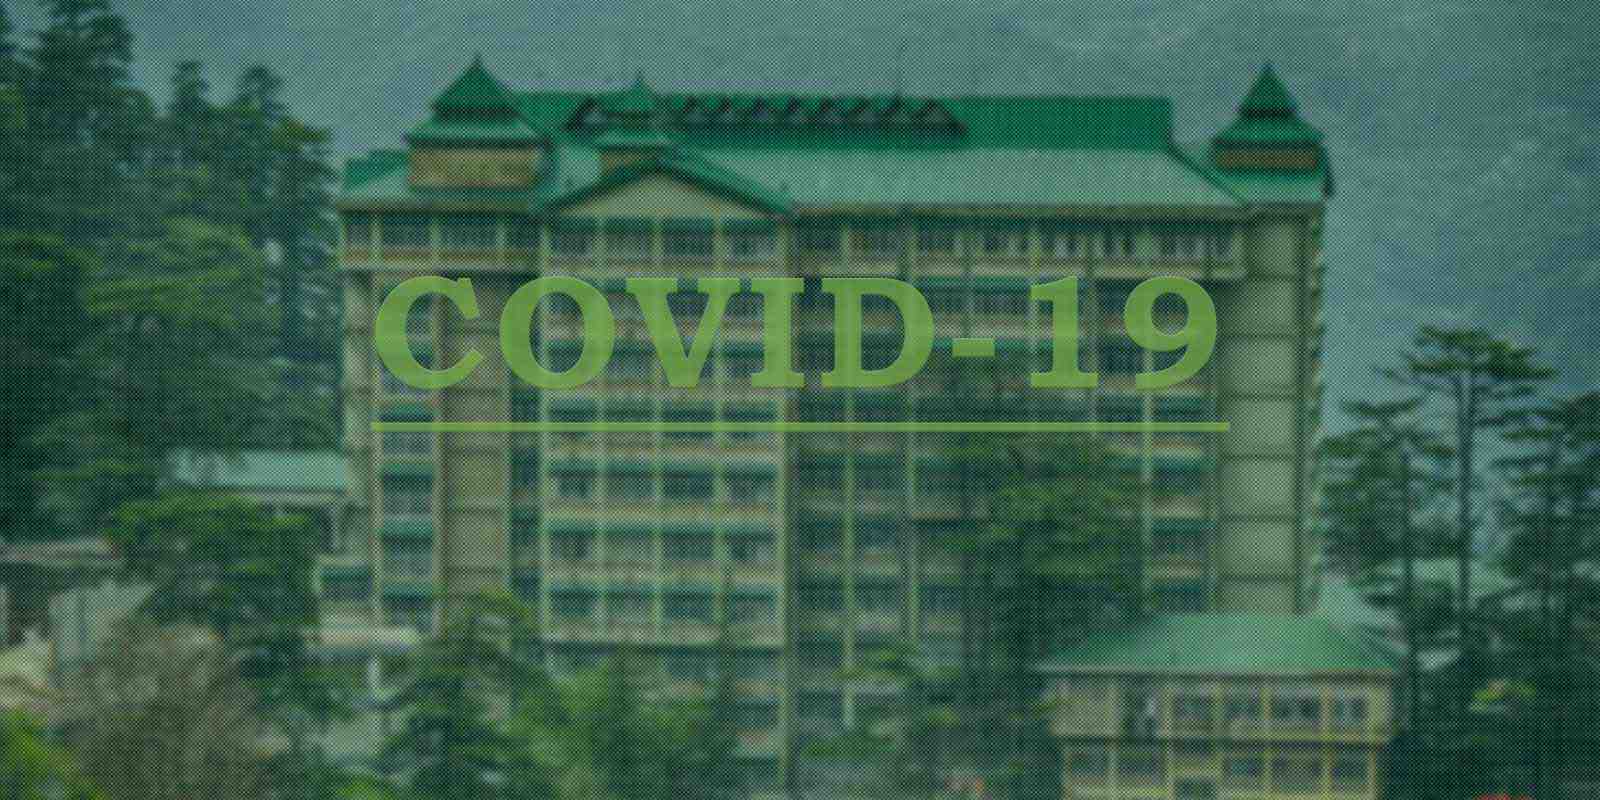 COVID-19 Bail to prisioners in Himachal Pradesh